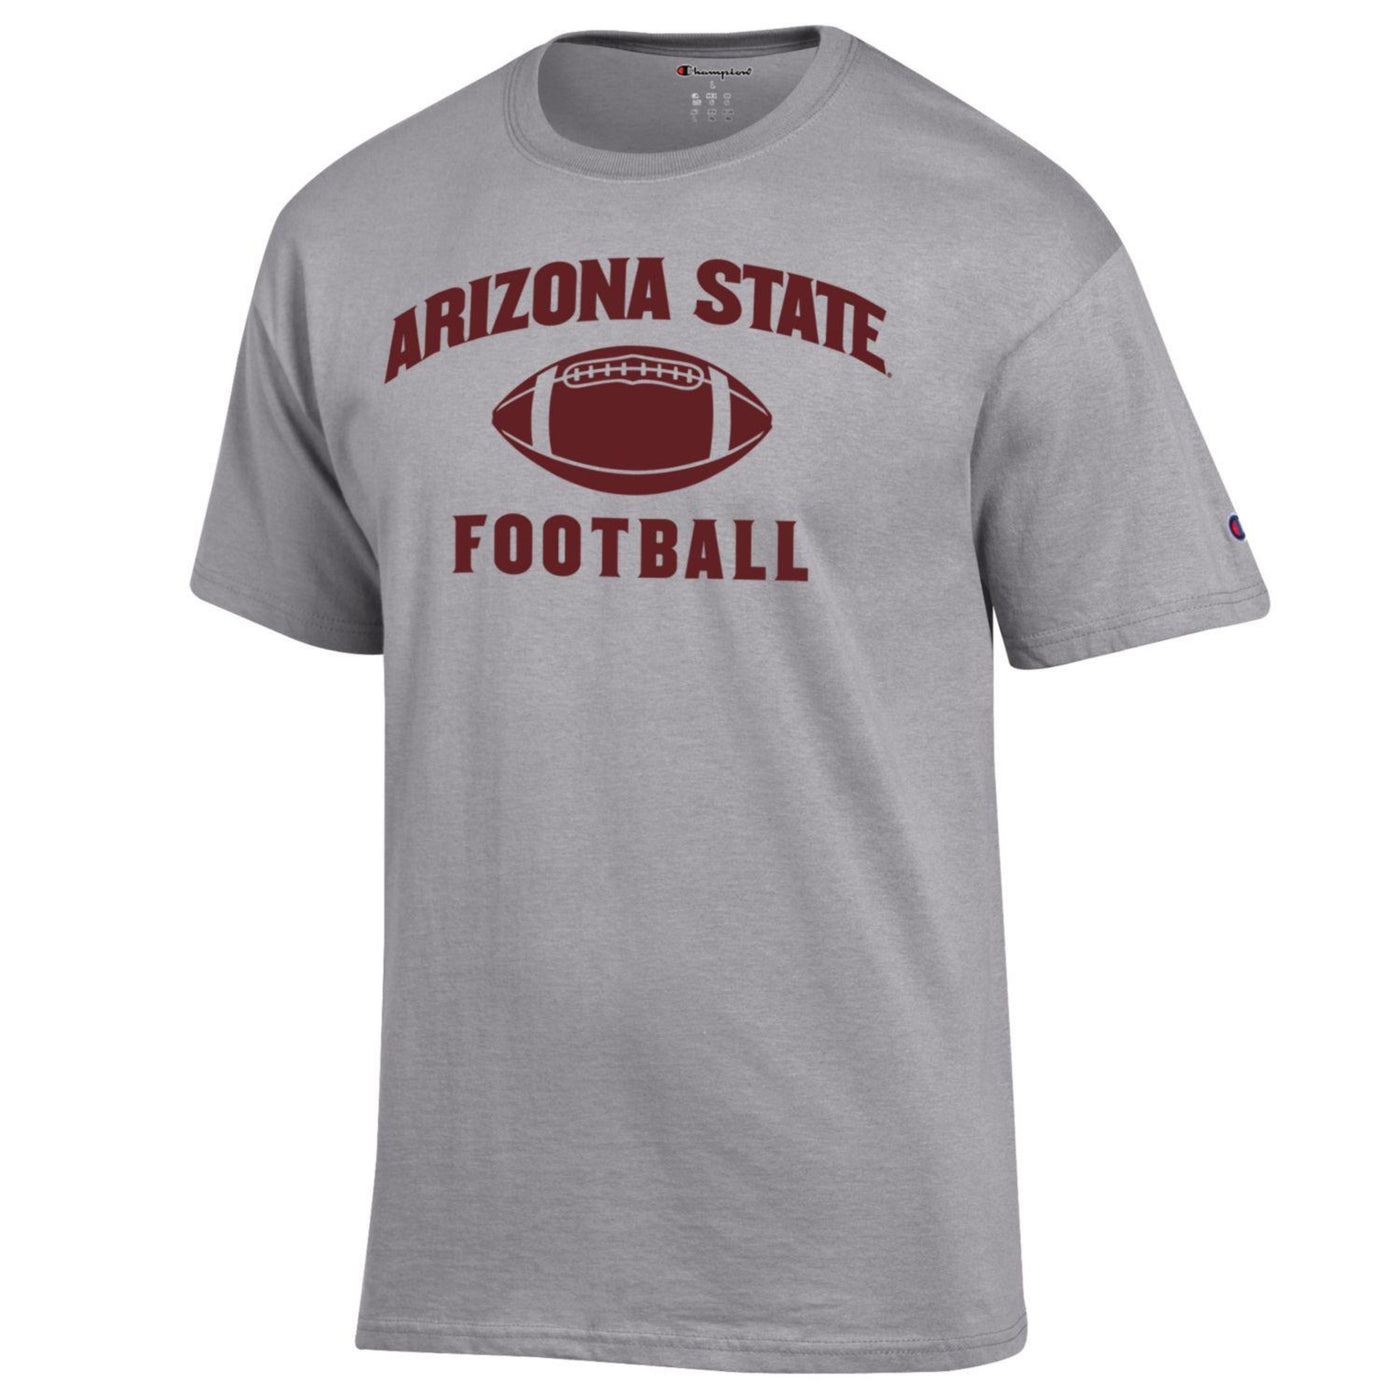 ASU gray Champion tee with 'Arizona State Football' lettering surrounding a football